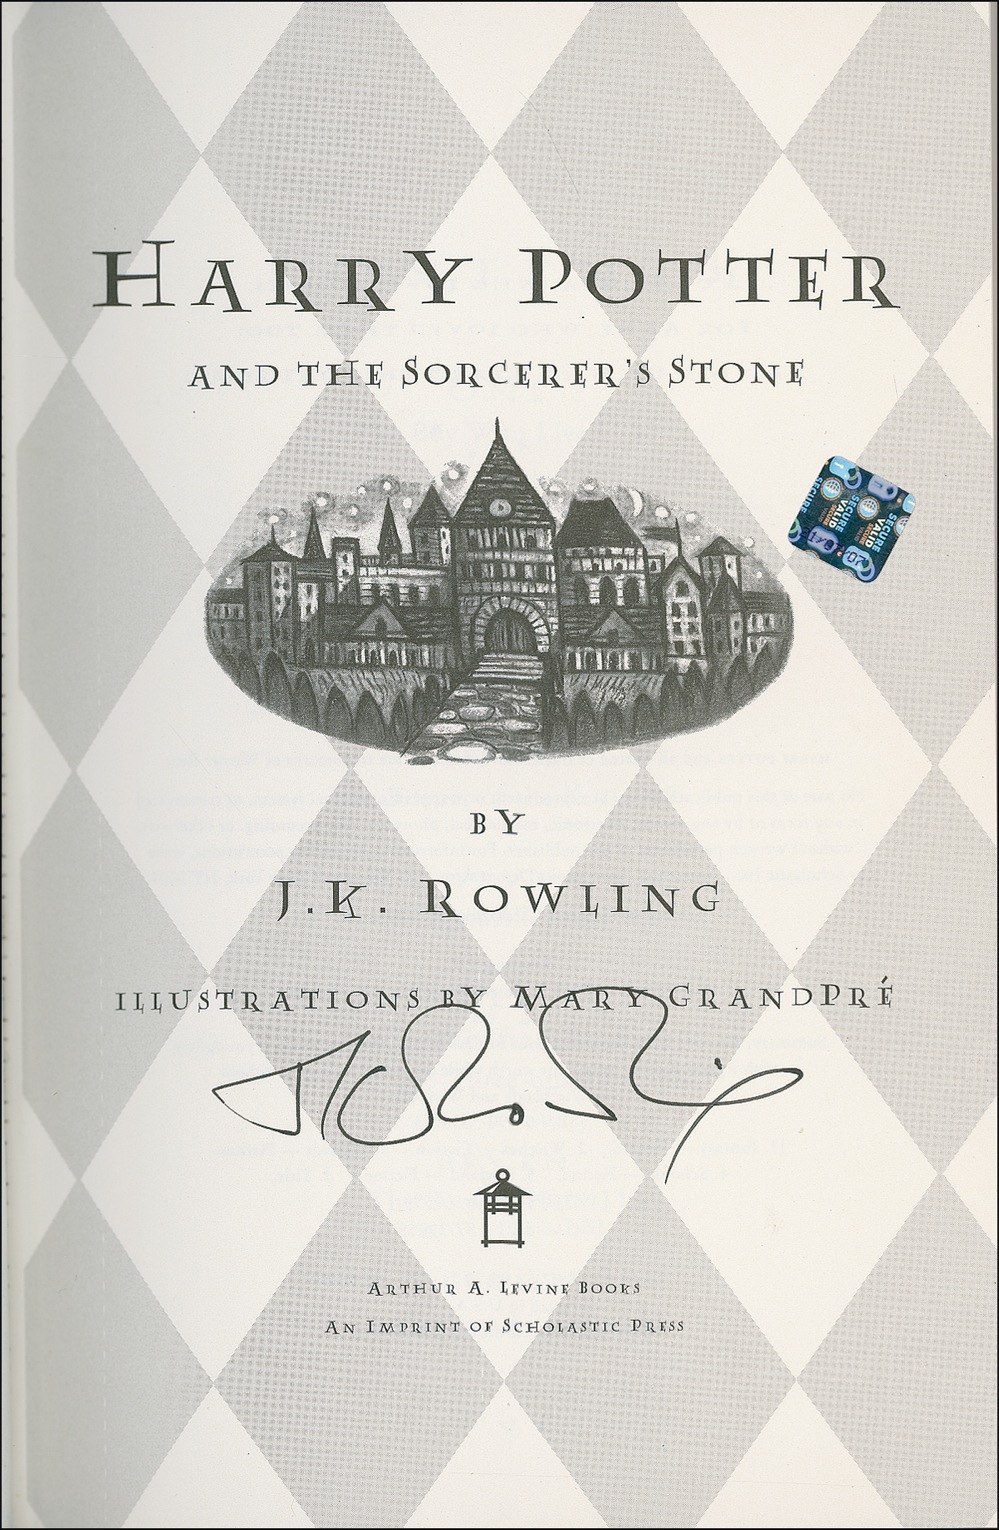 Lot #629 J. K. Rowling